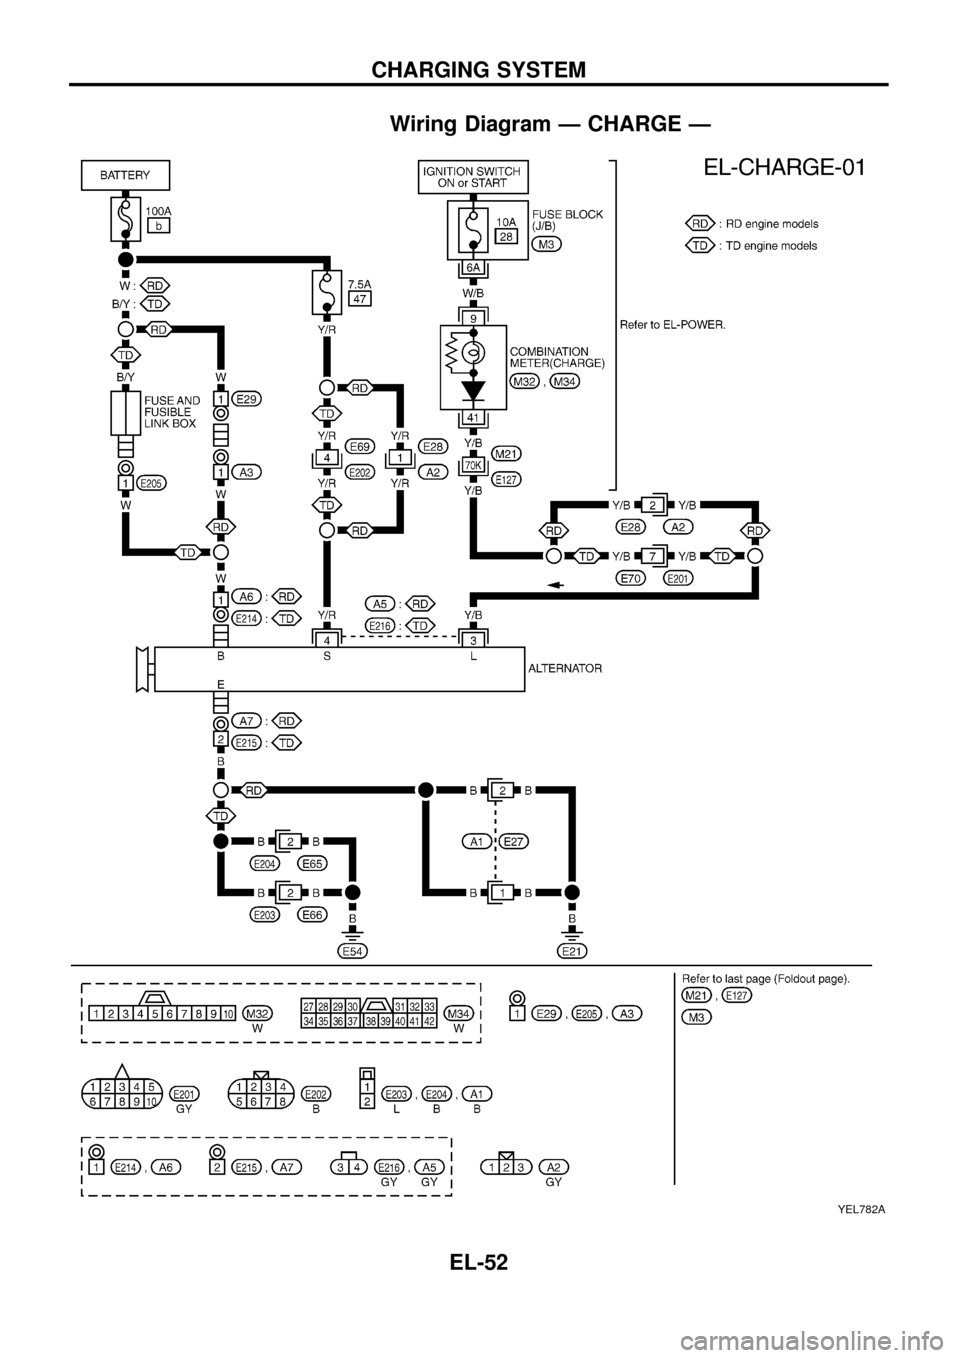 NISSAN PATROL 1998 Y61 / 5.G Electrical System Workshop Manual Wiring Diagram Ð CHARGE Ð
YEL782A
CHARGING SYSTEM
EL-52 